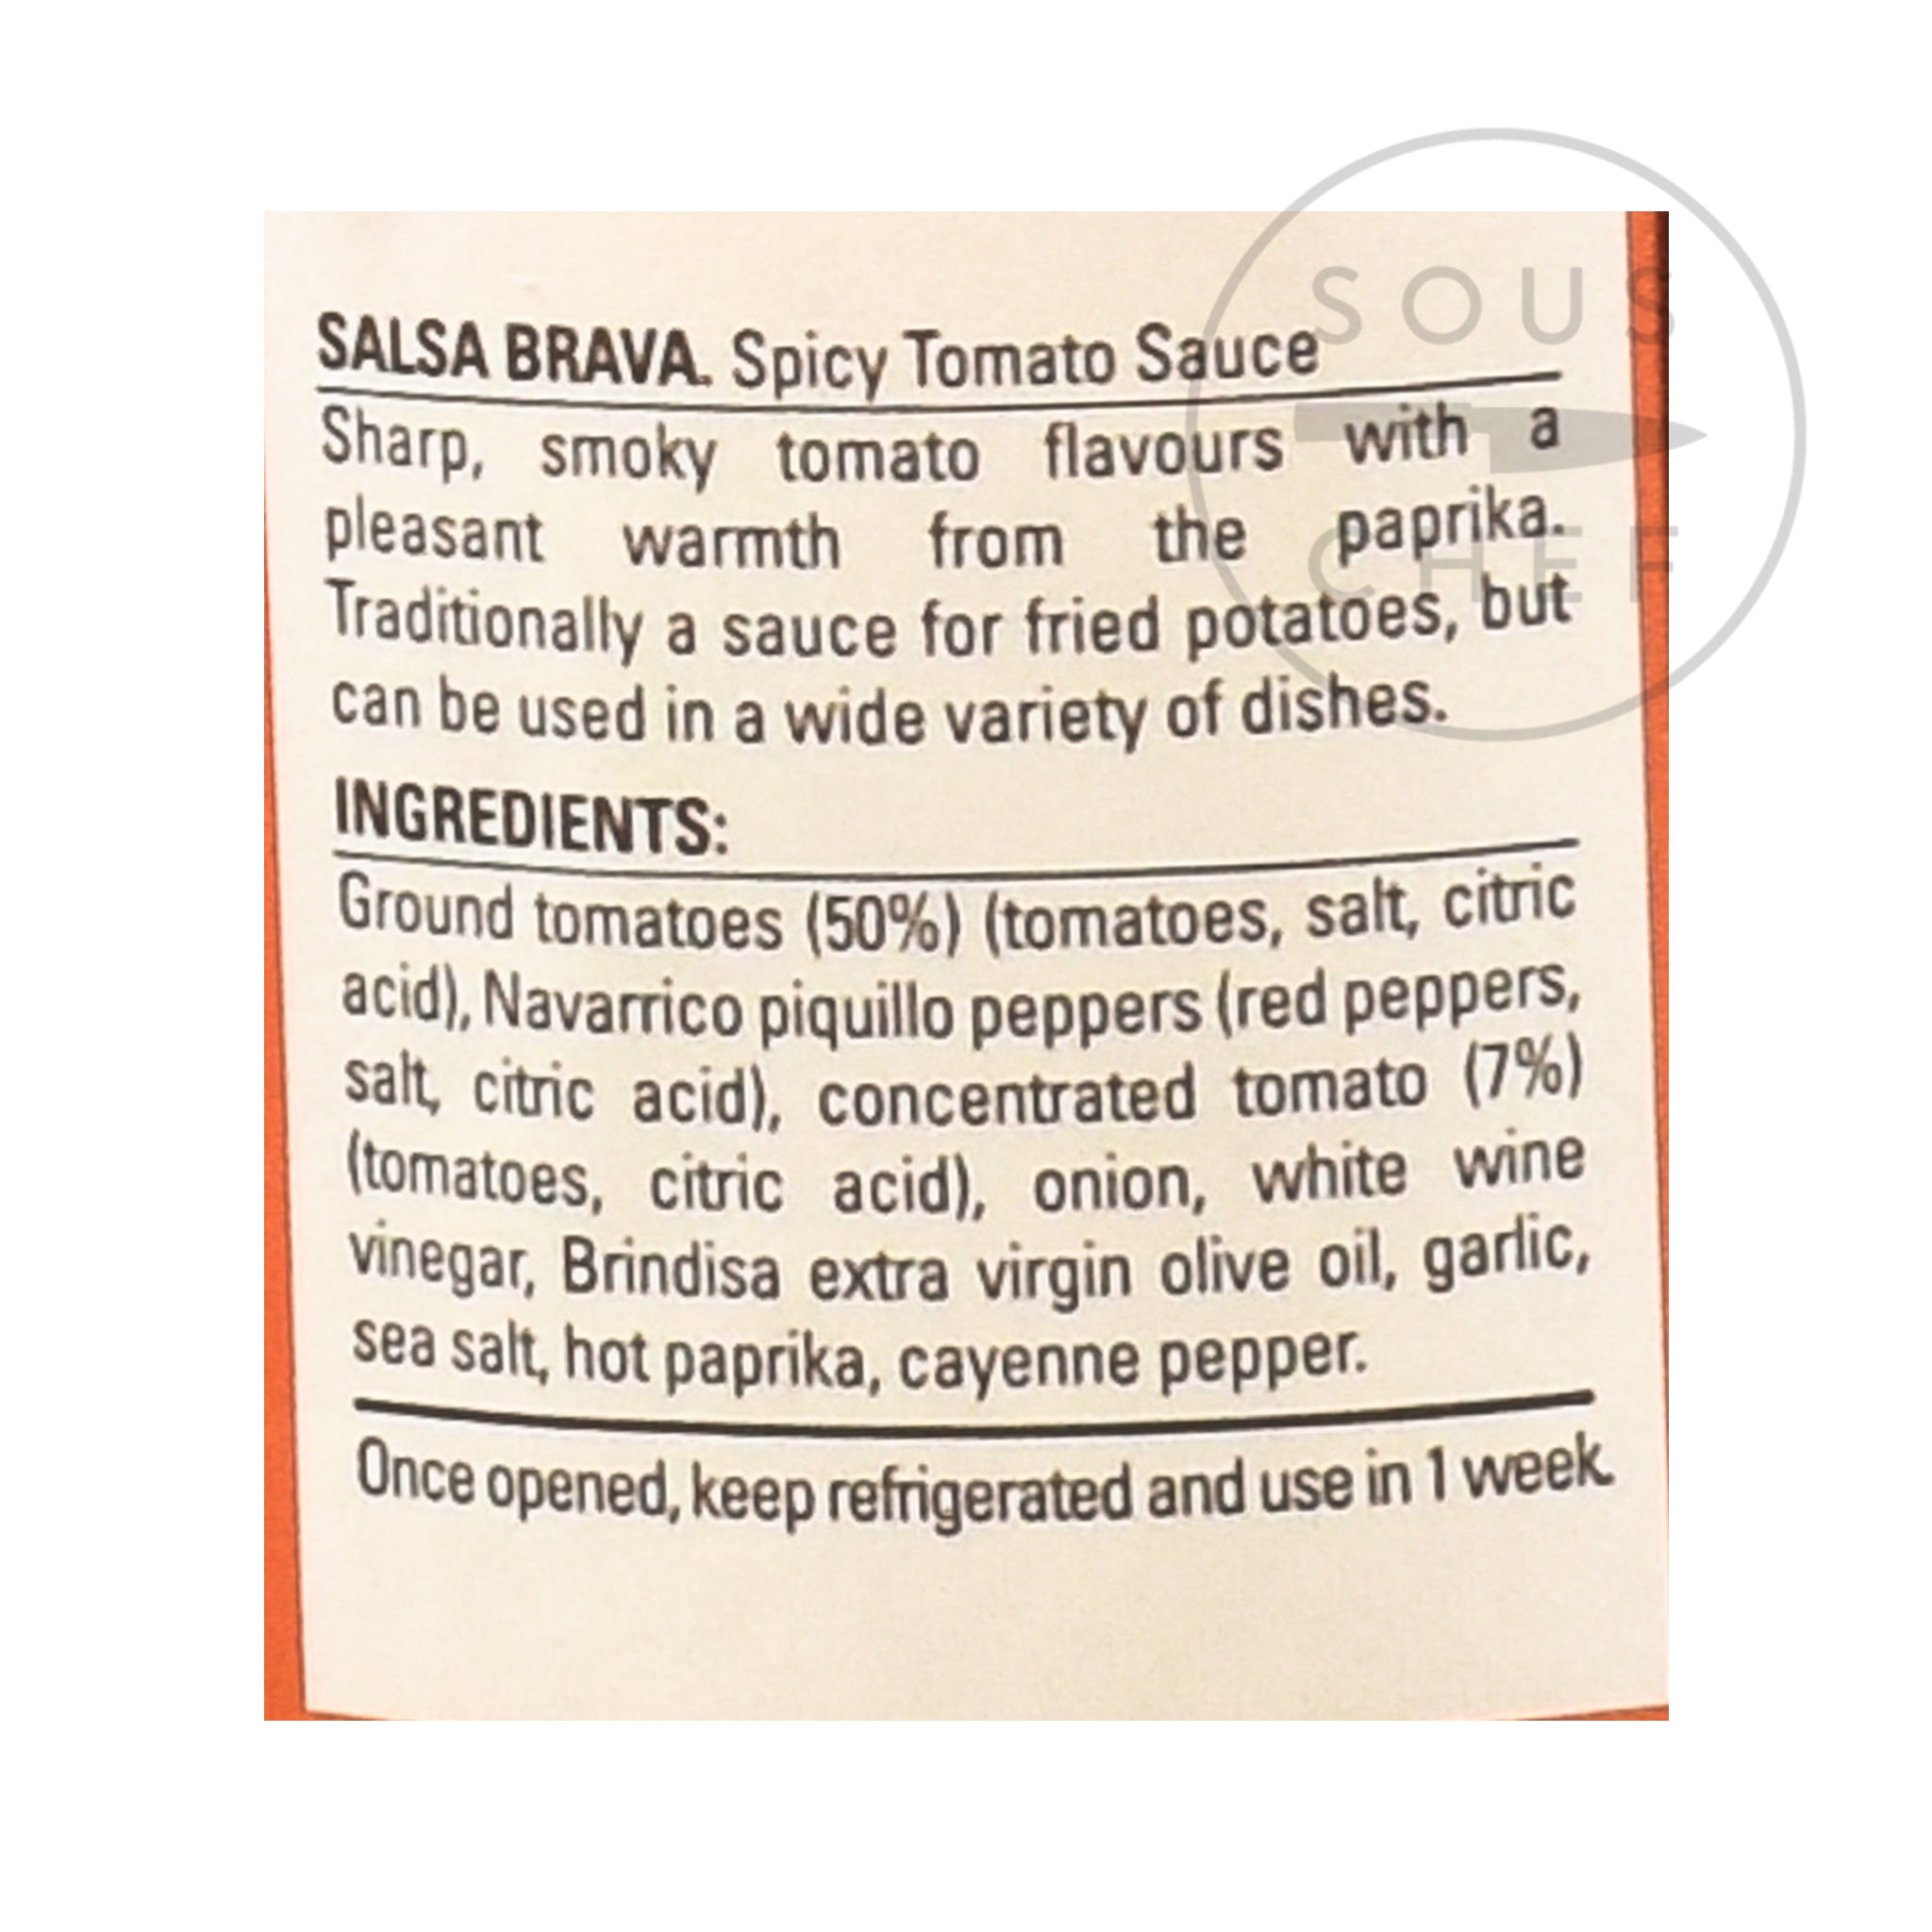 Brindisa Salsa Brava, Spicy Tomato Sauce 315g Ingredients Sauces & Condiments Spanish Food Ingredients Information